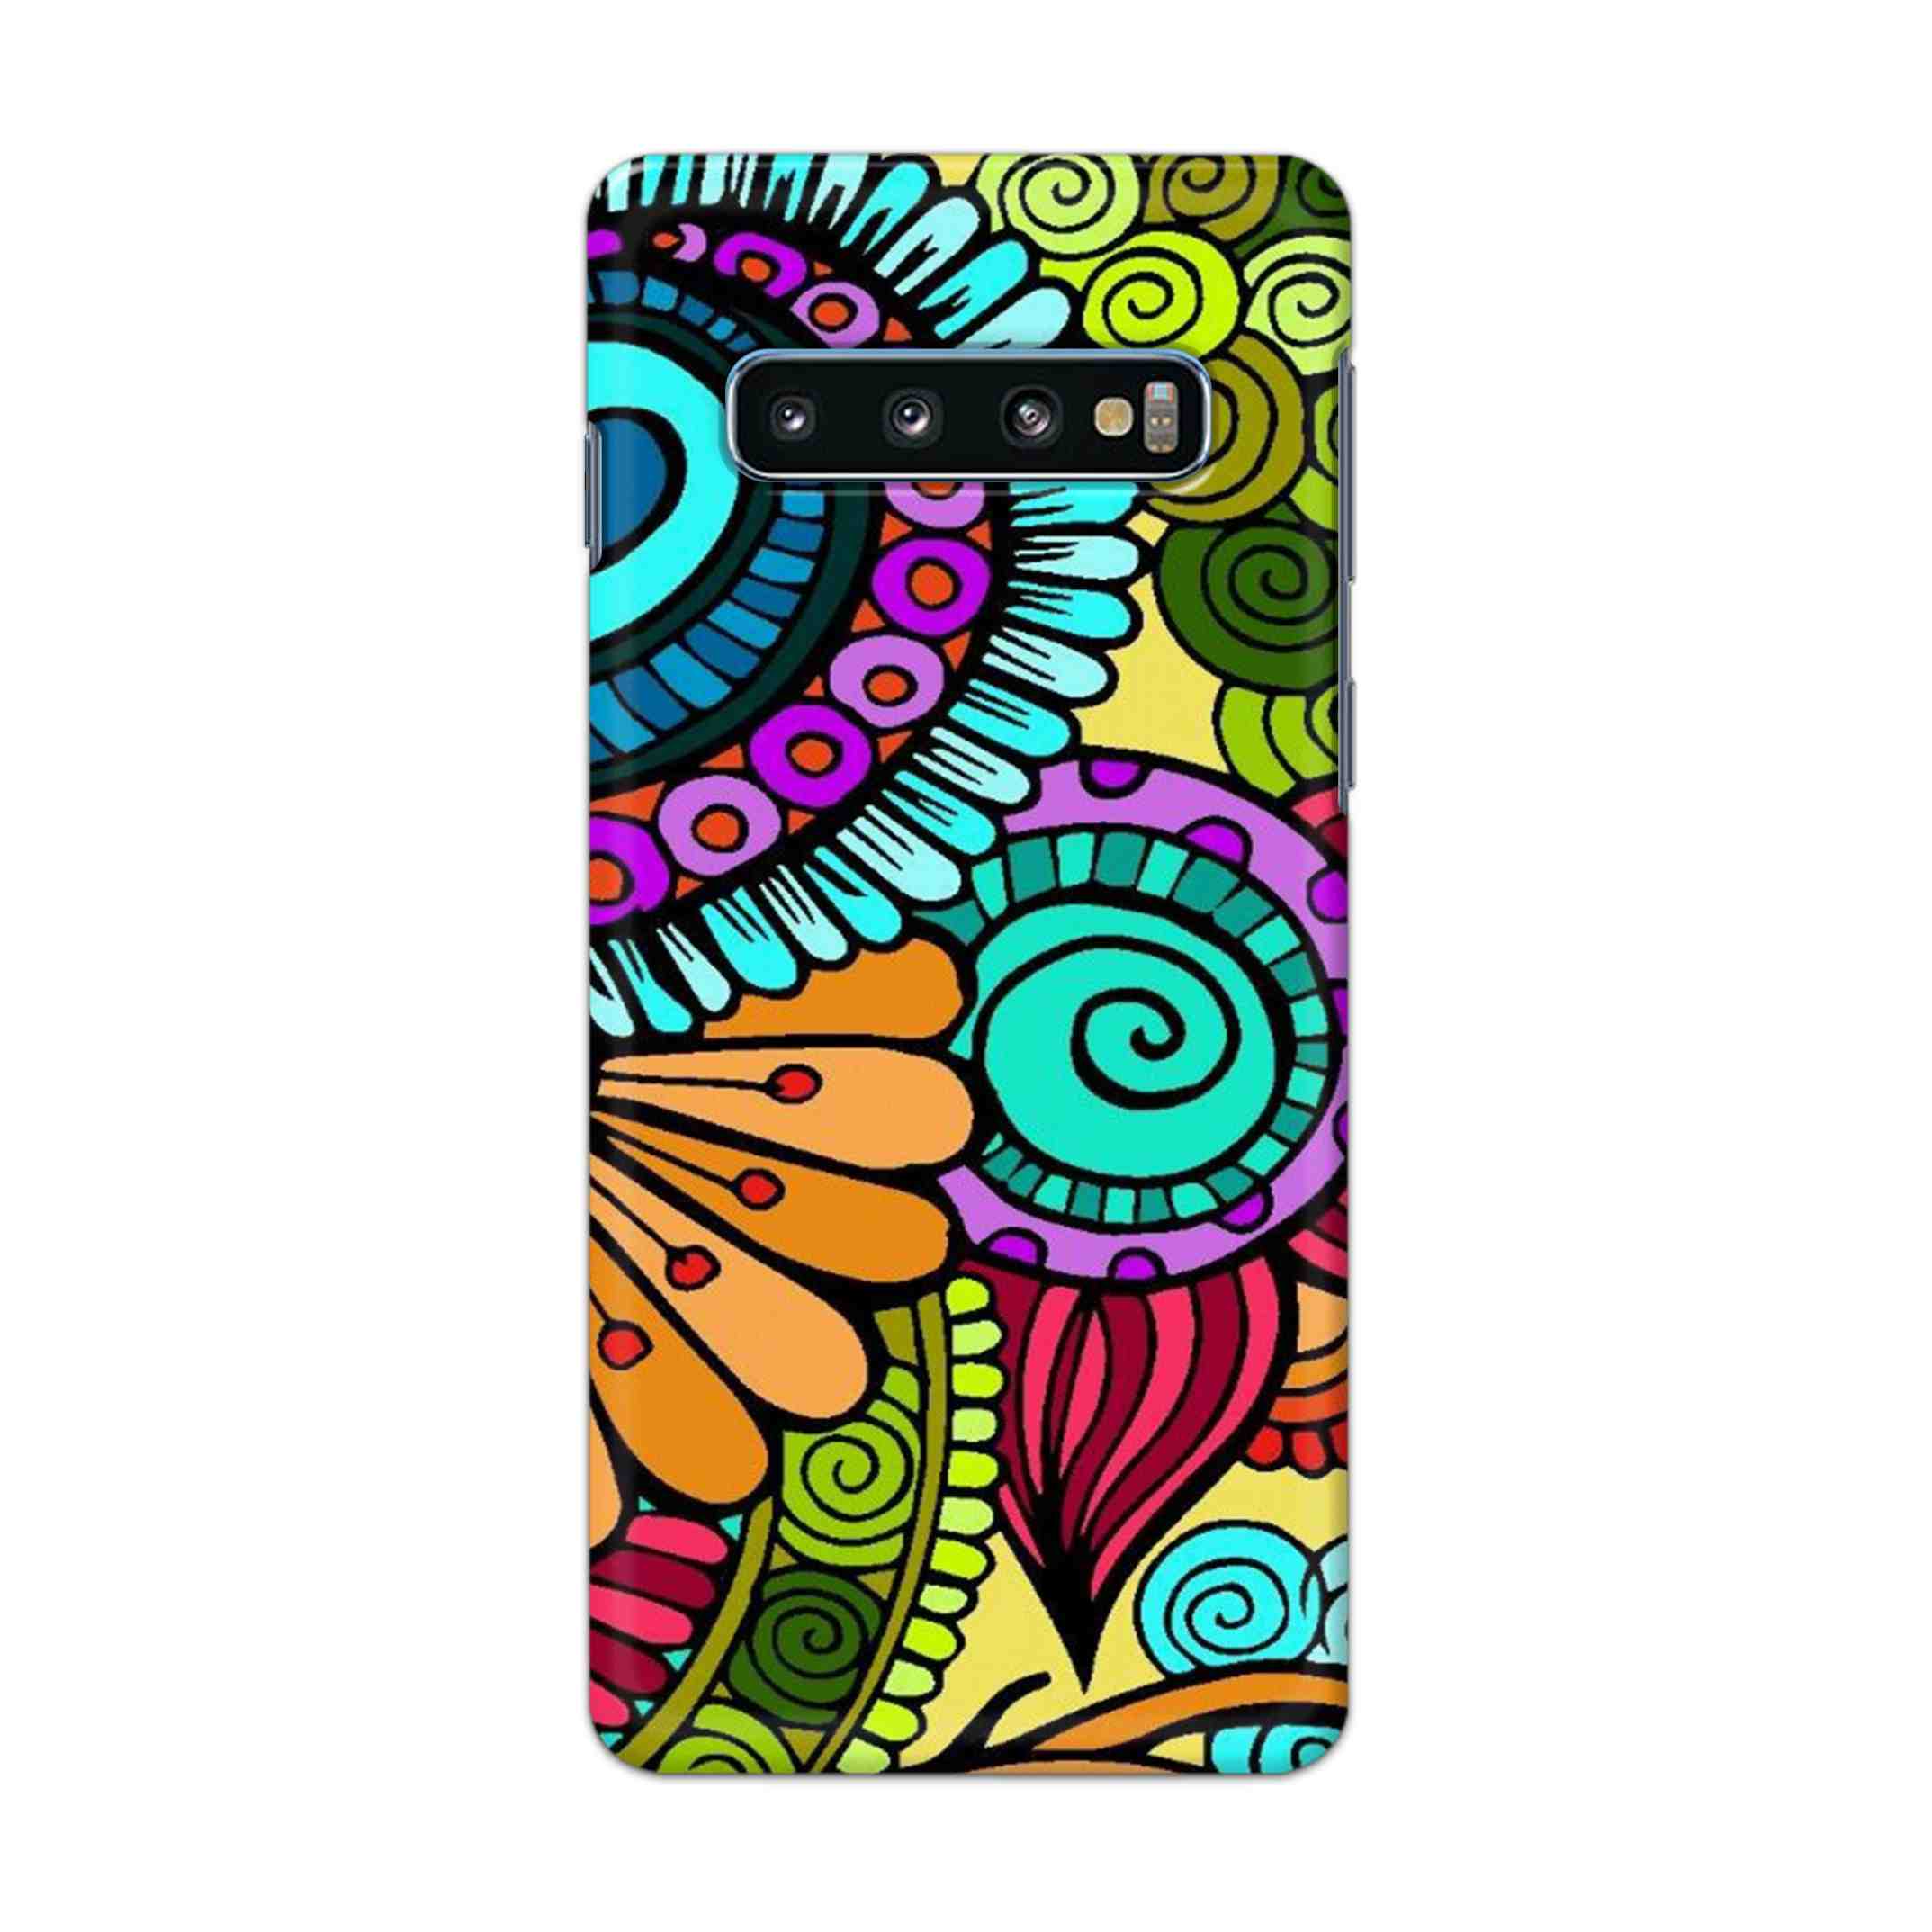 Buy The Kalachakra Mandala Hard Back Mobile Phone Case Cover For Samsung Galaxy S10 Plus Online